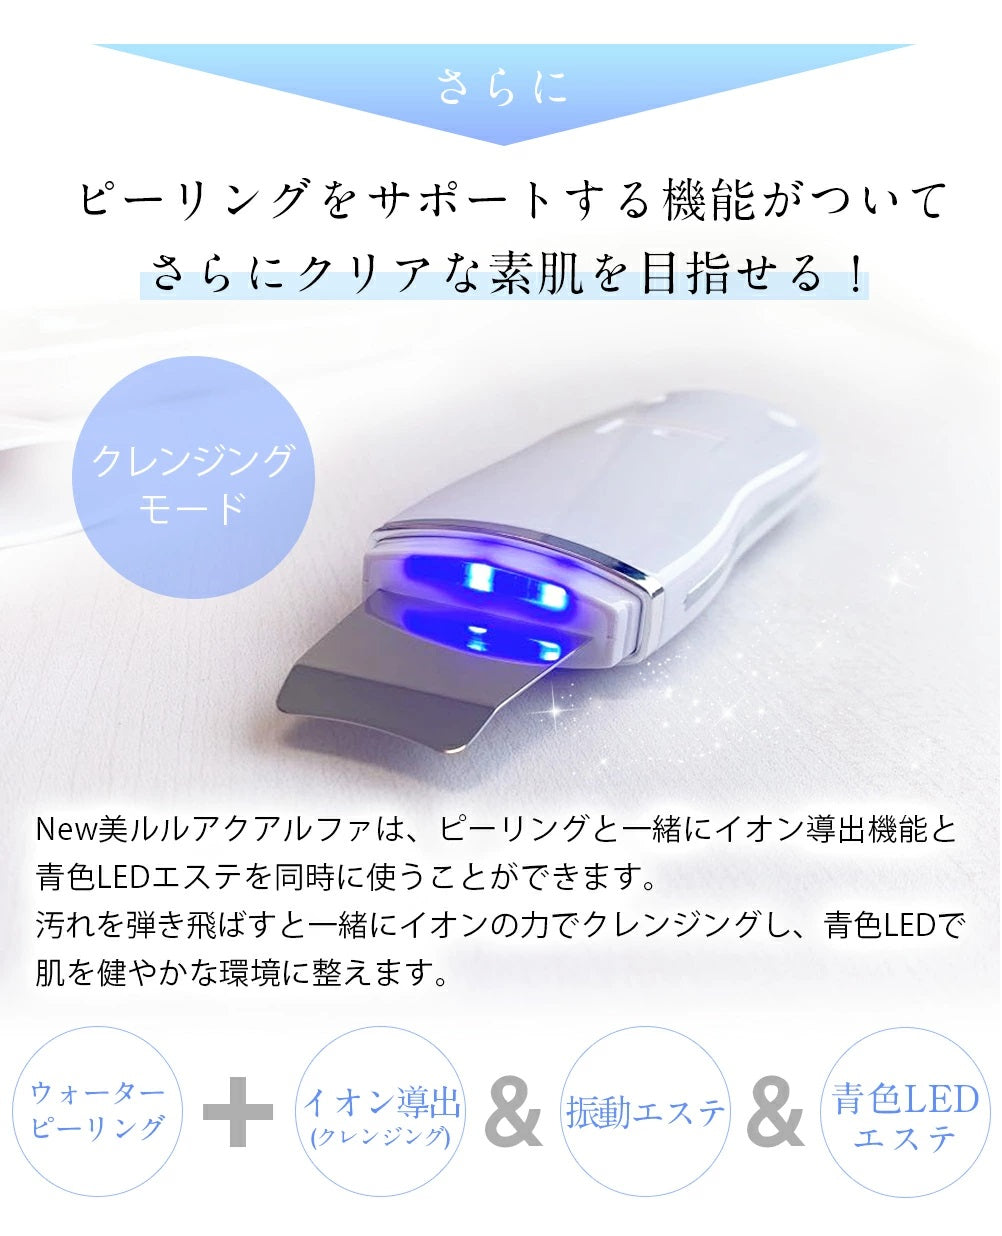 New Belulu AquaRufa Beauty Device (Made in Japan)